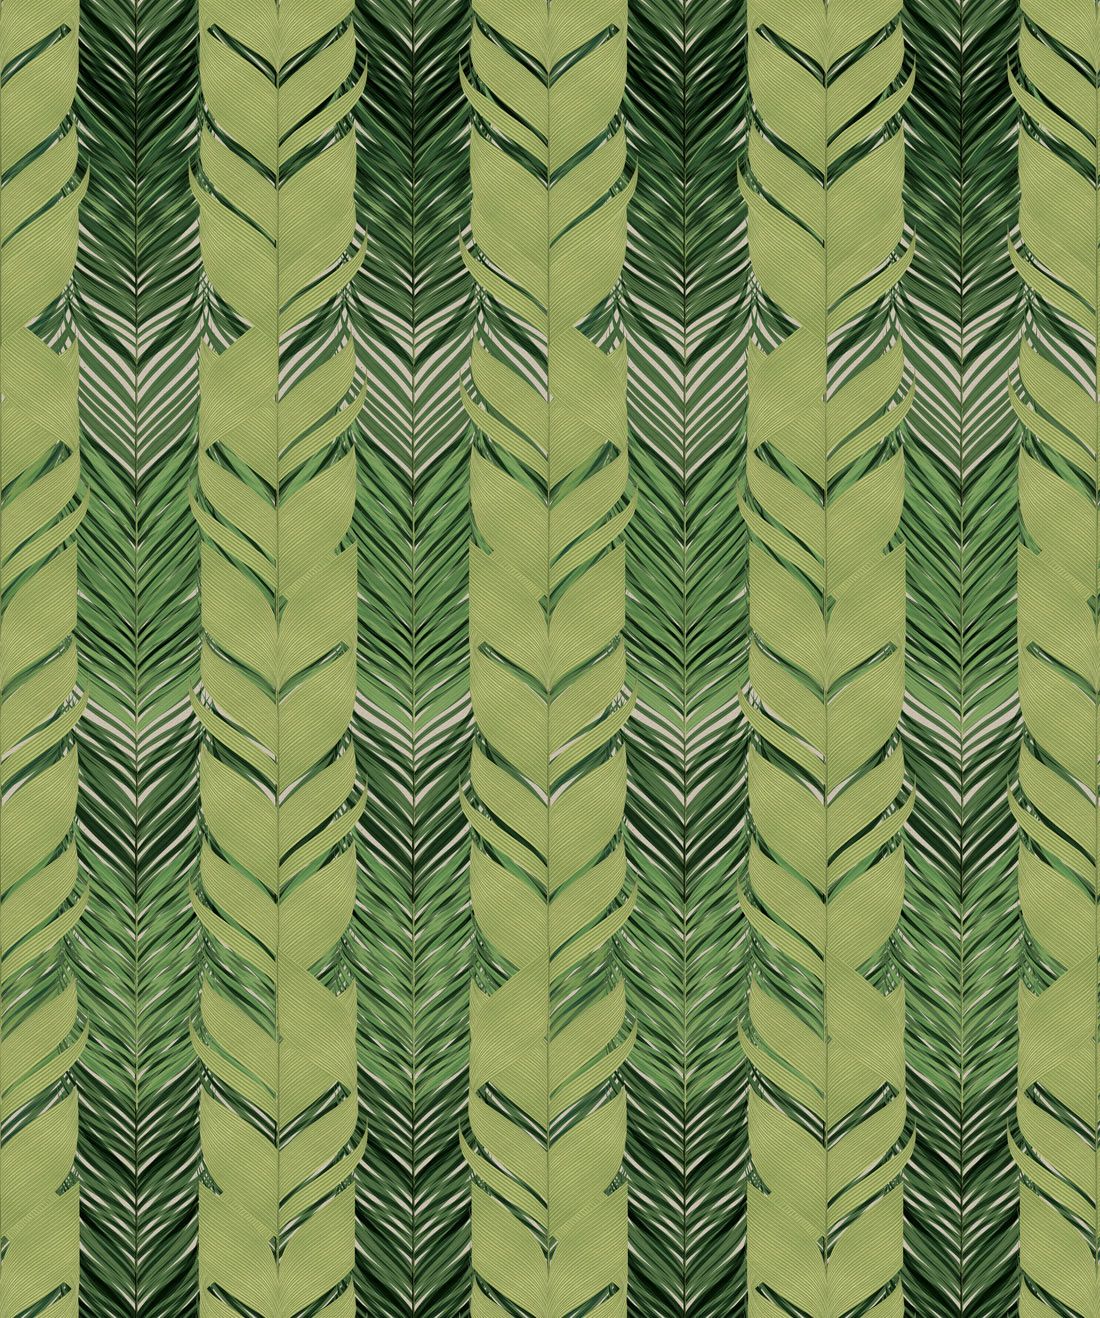 Jungle Weave is a Foliage wallpaper